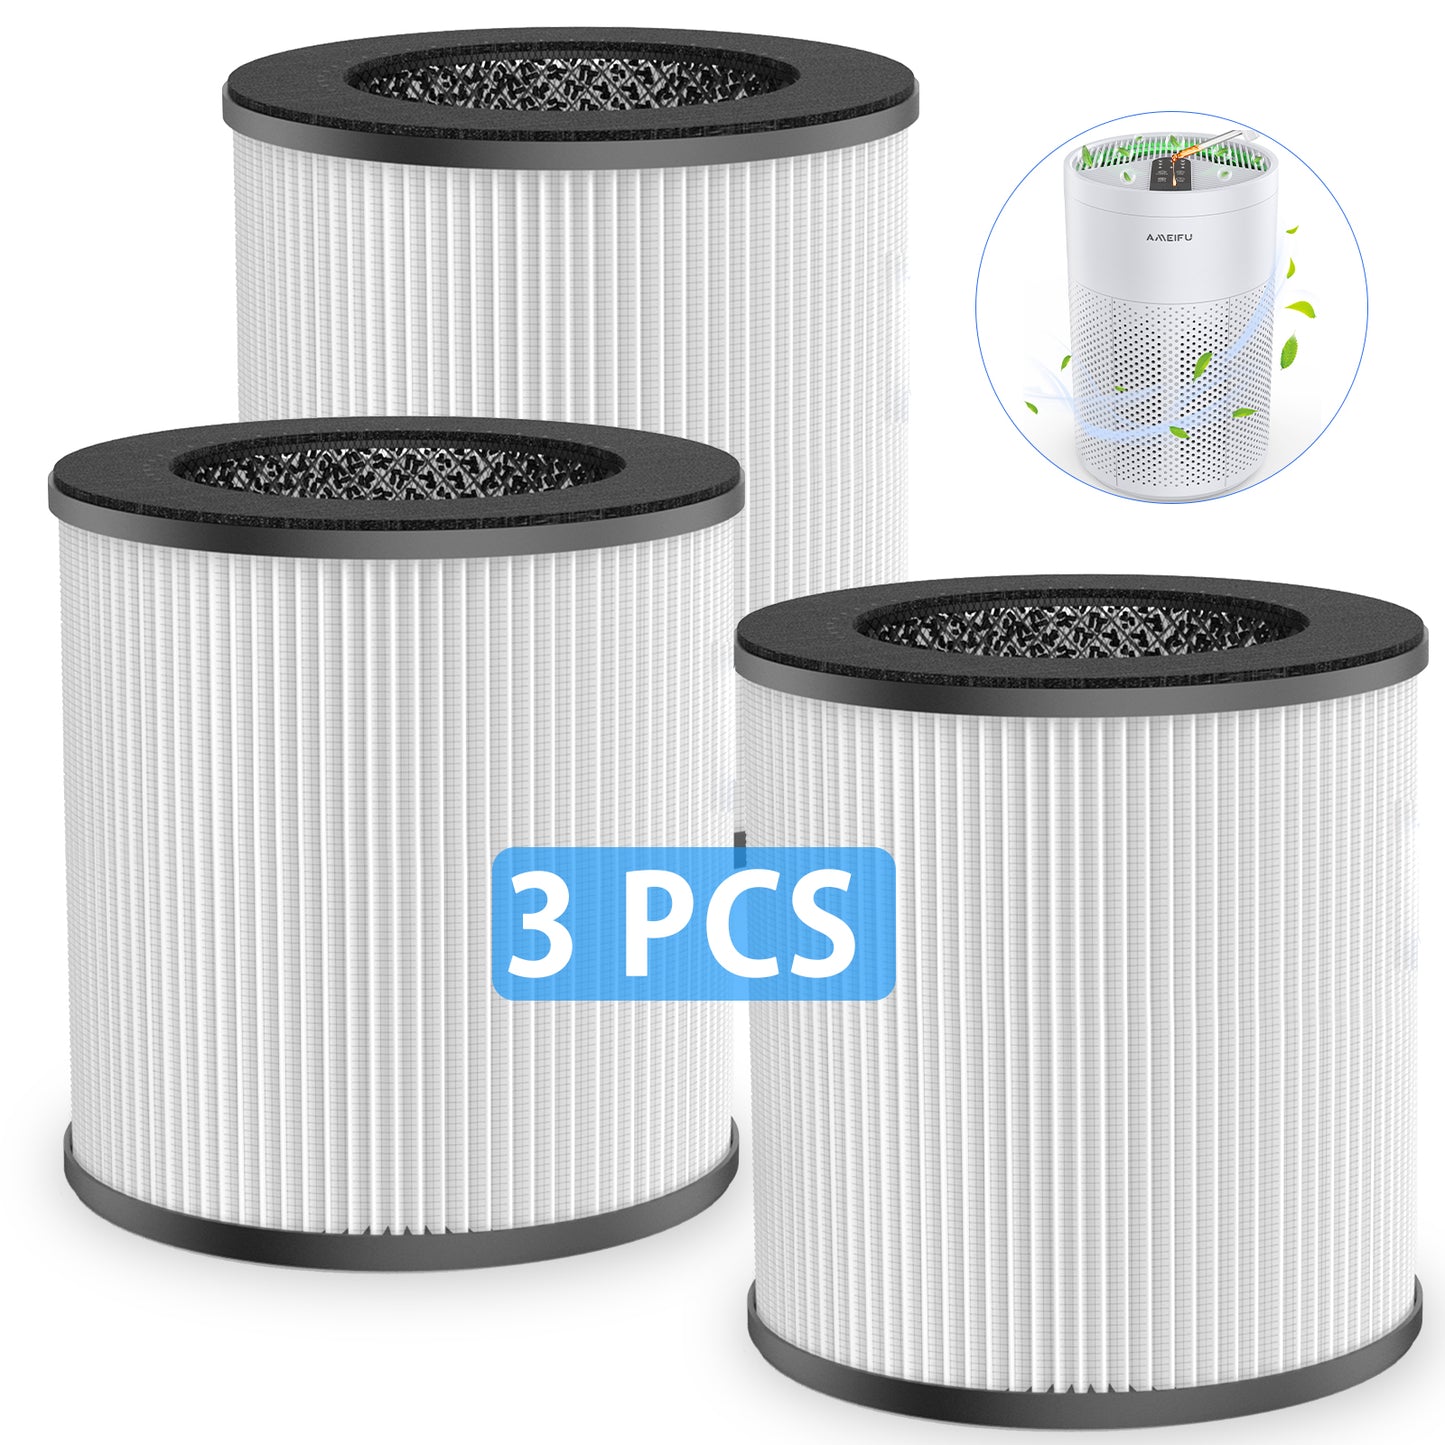 AMEIFU GDAP1W Air Purifier Replacement Filter, Air Cleaner Filter True HEPA Filter, White Black